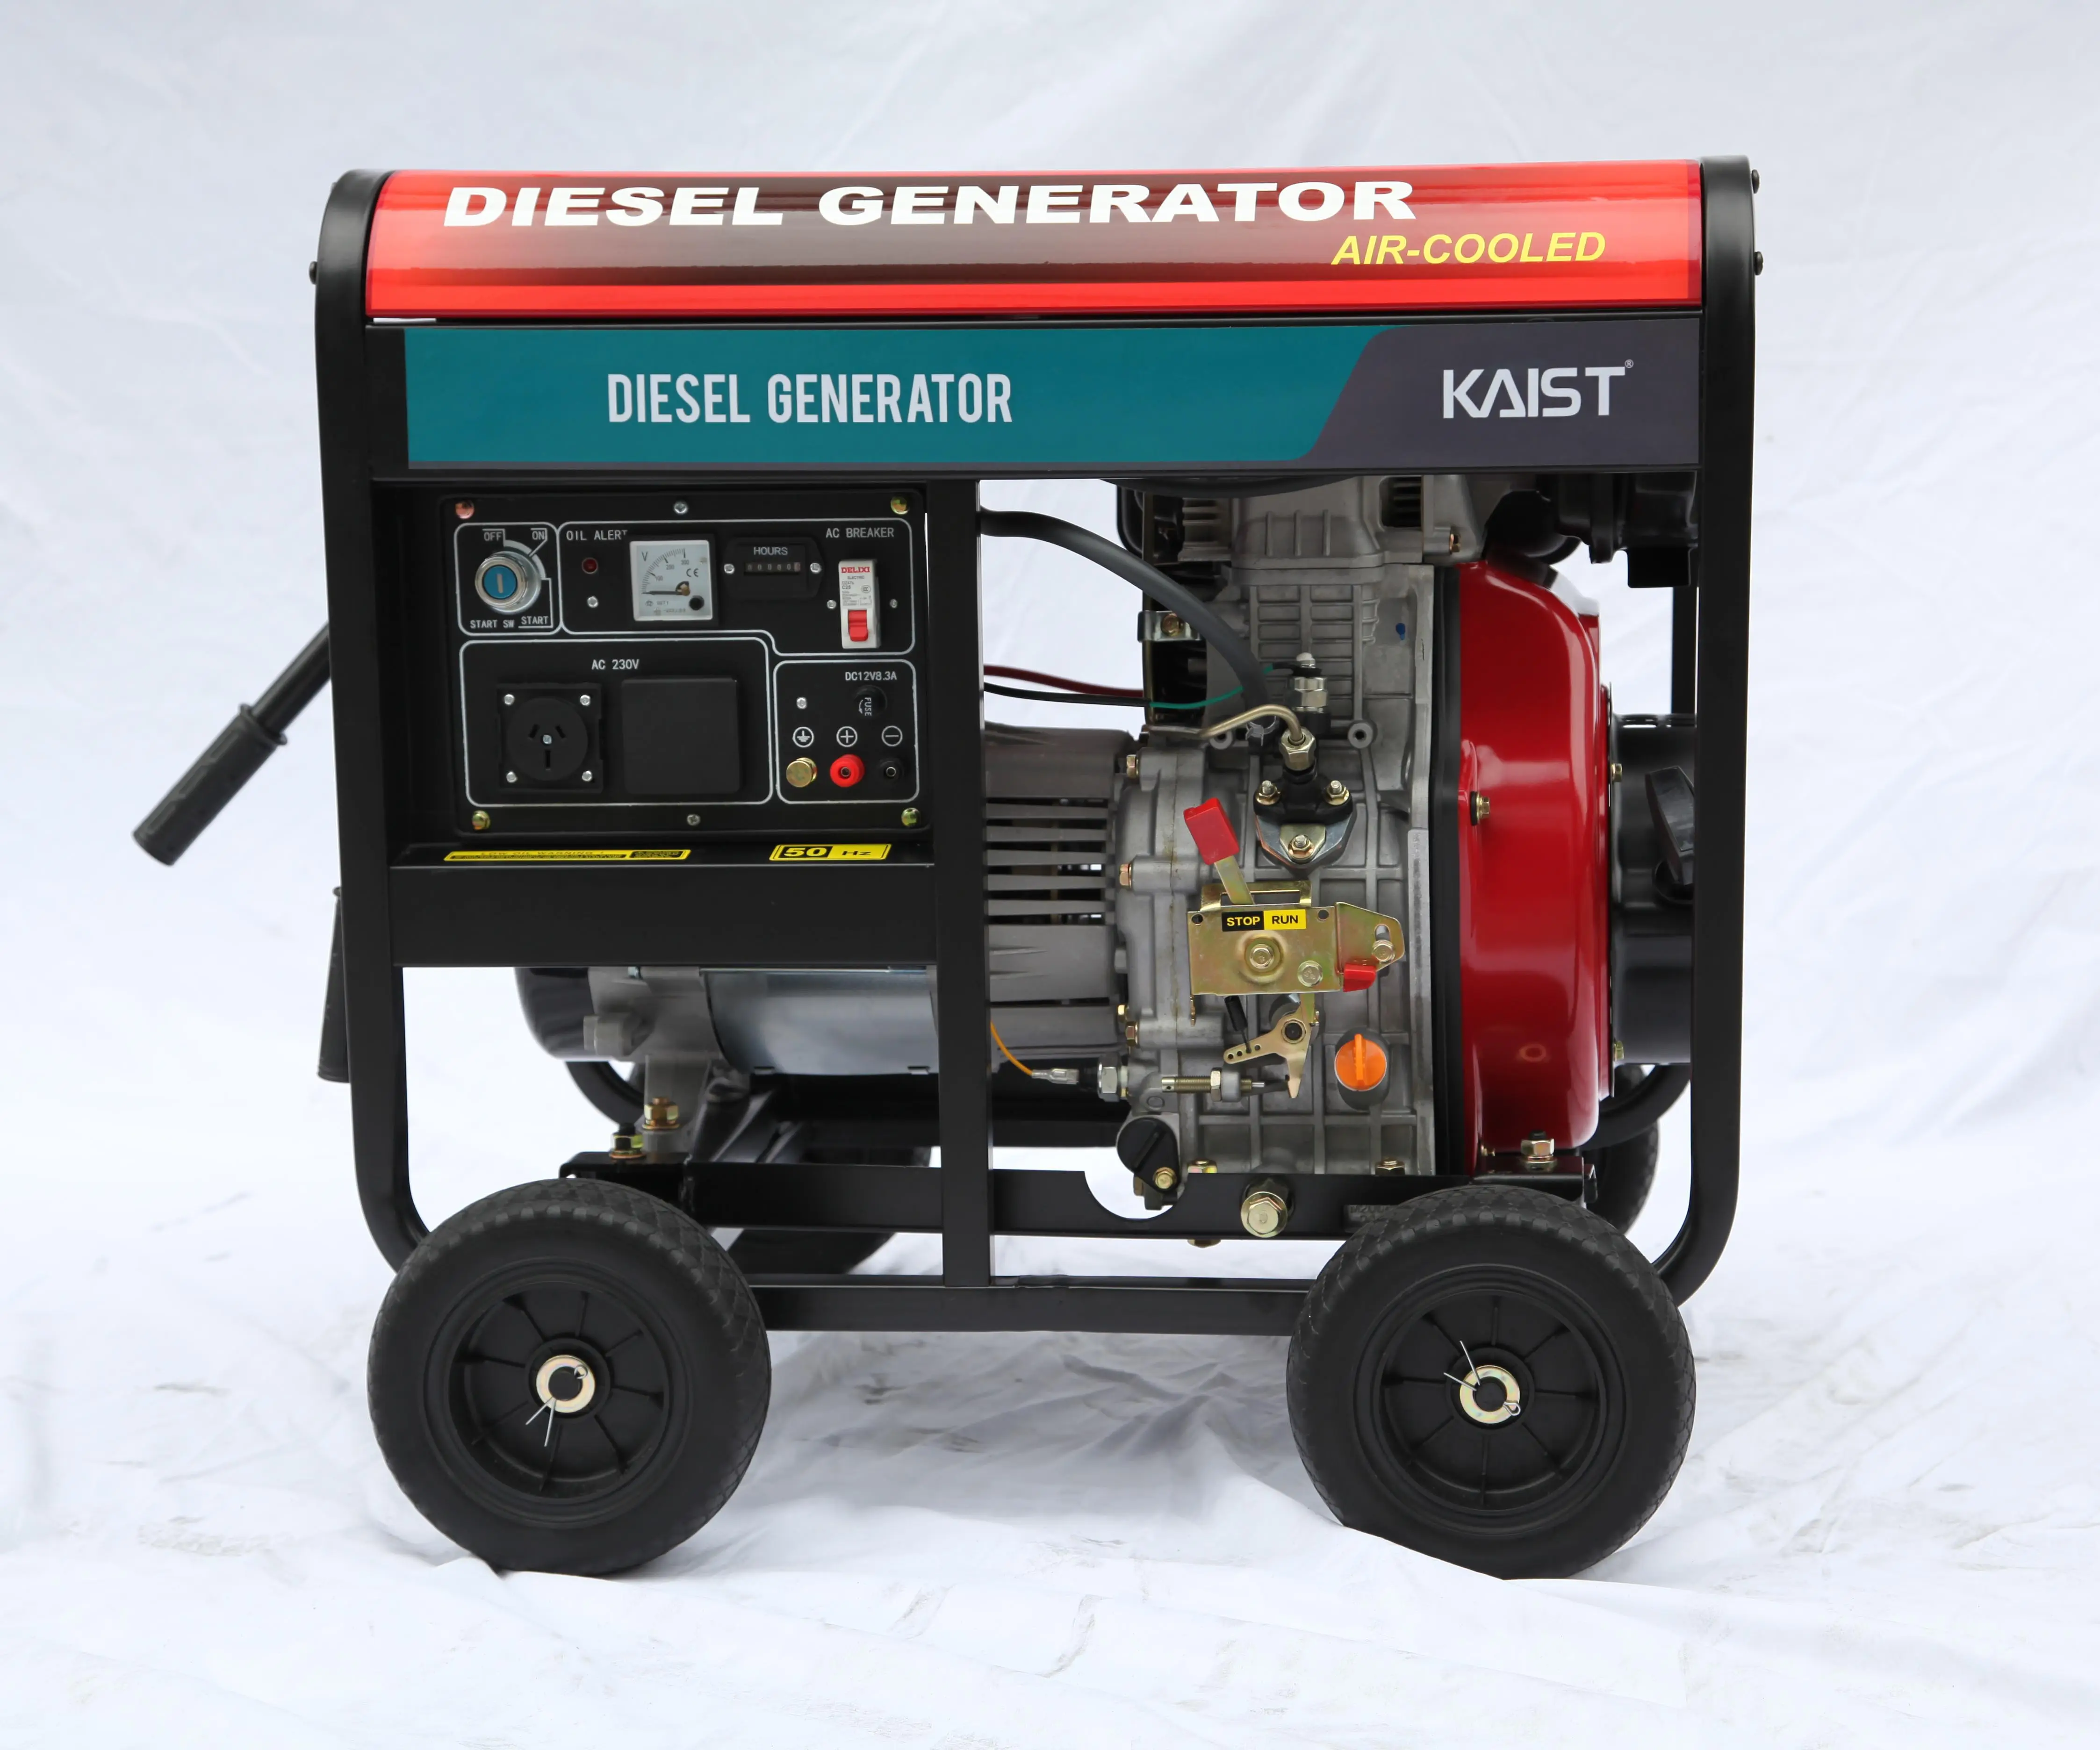 KAIST KDE6700LE Fueless güç jeneratör fiyat alternatör jeneratör 5kw